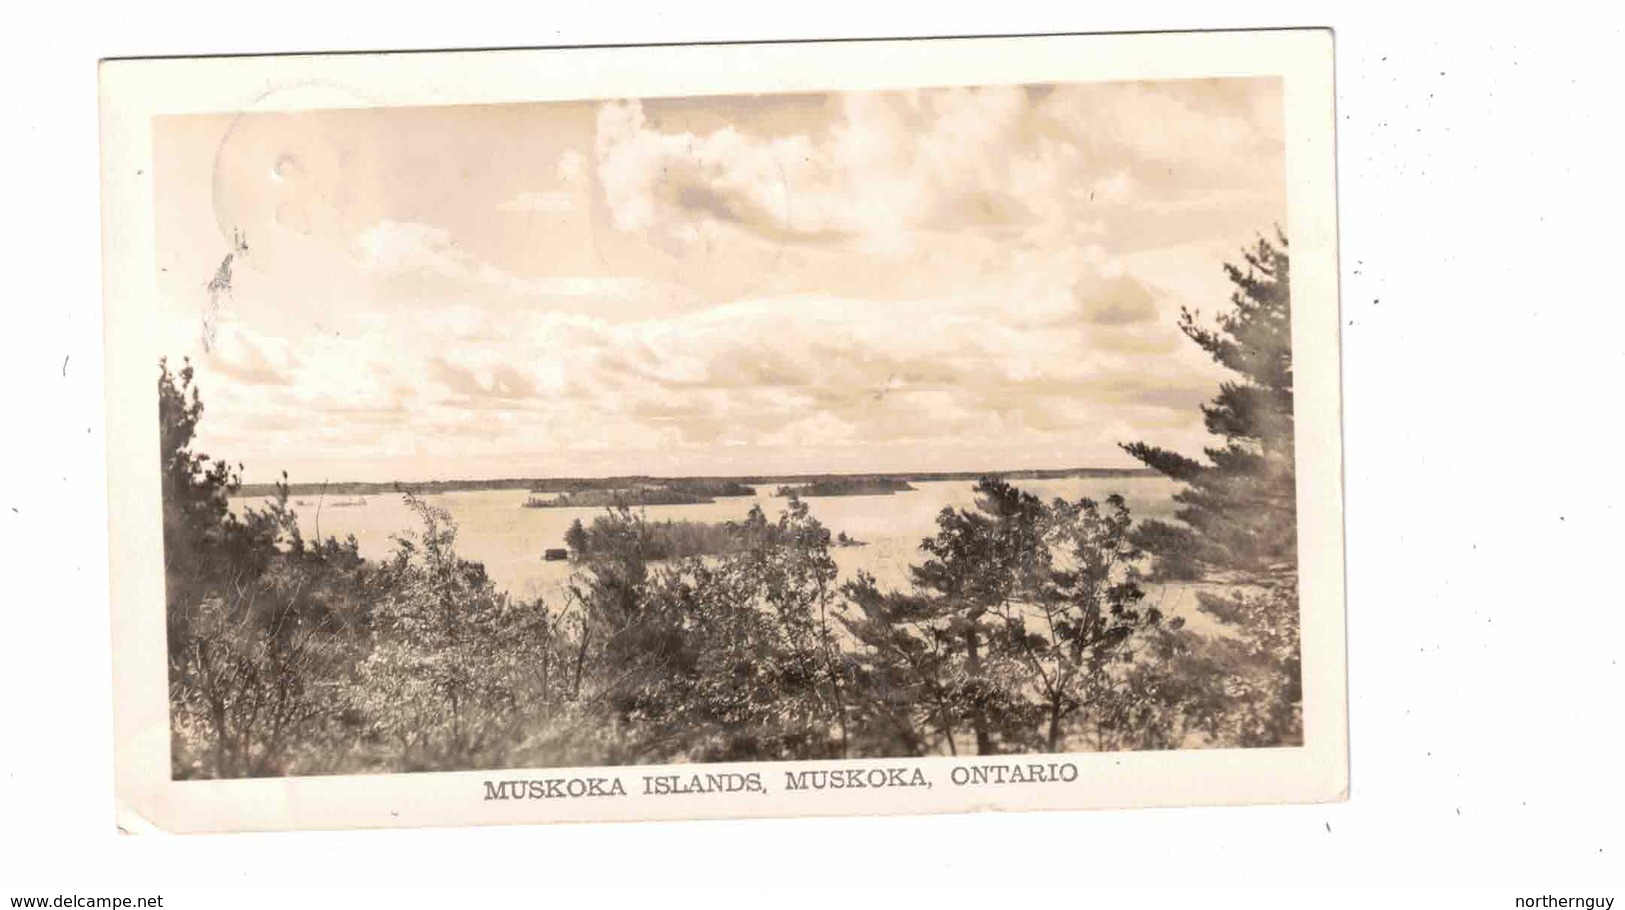 Muskoka, Ontario, Canada, Muskoka Islands, Muskoka Lakes?, 1949 B&W Real Photo Postcard, Muskoka County - Muskoka